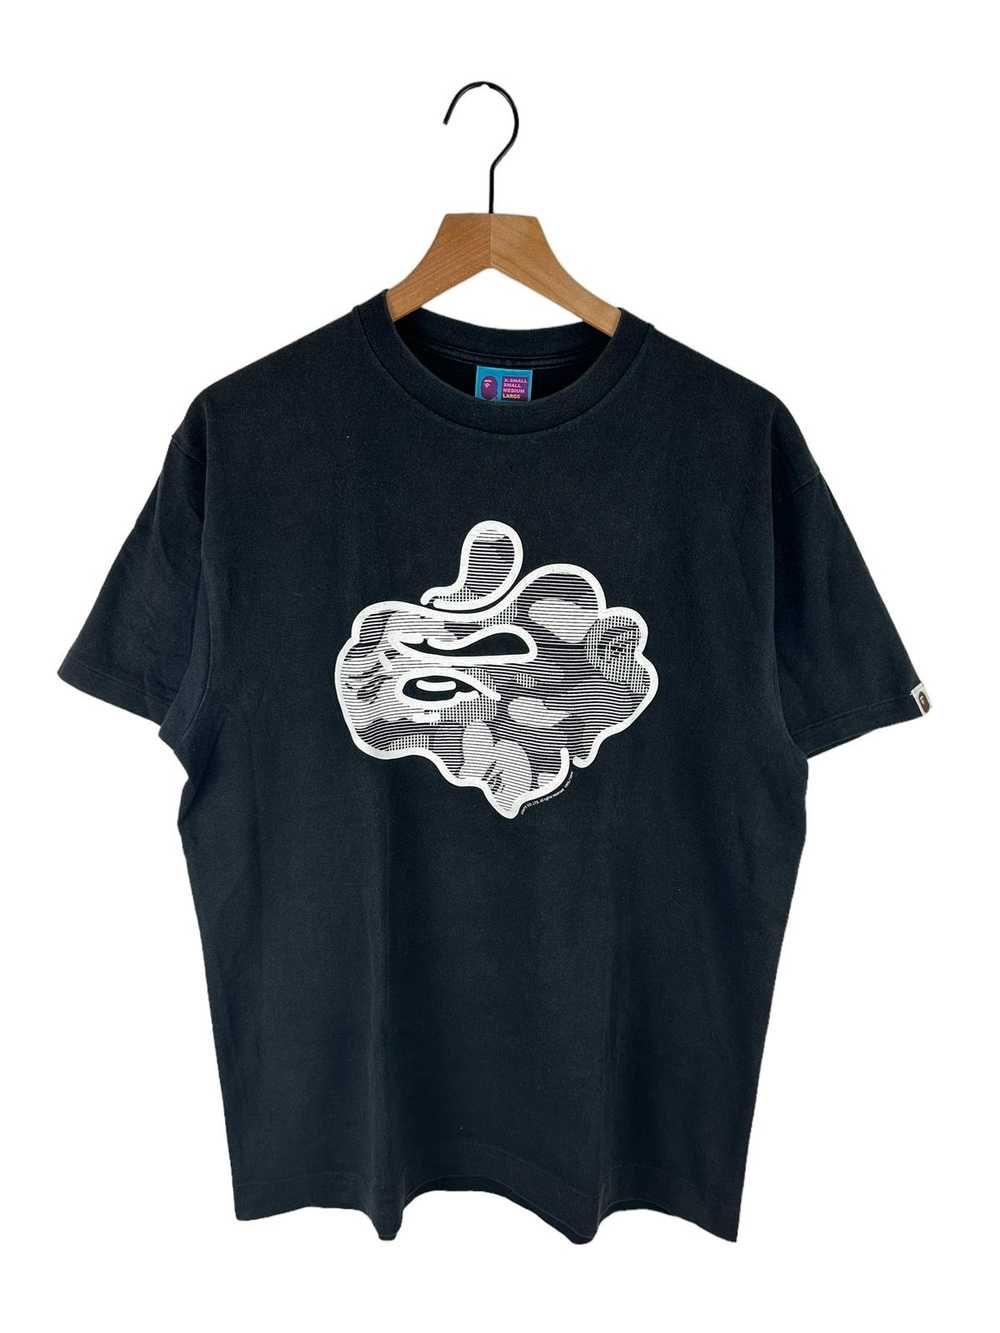 Bape 2006 Bape Logo Print T-Shirt - image 1